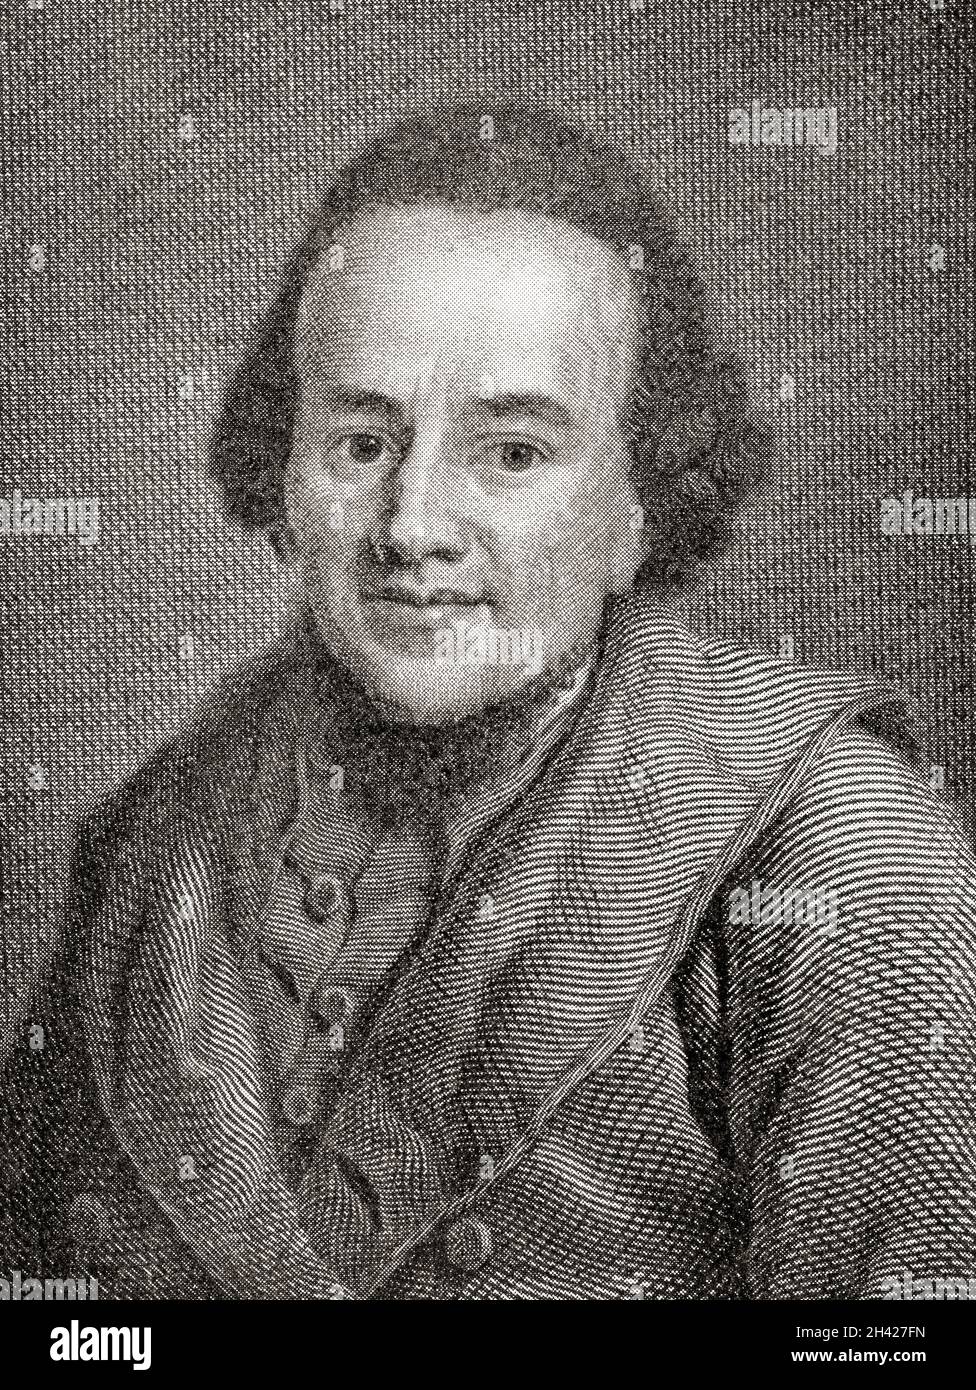 Moïse Mendelssohn, 1729 - 1786.Philosophe juif allemand. Banque D'Images